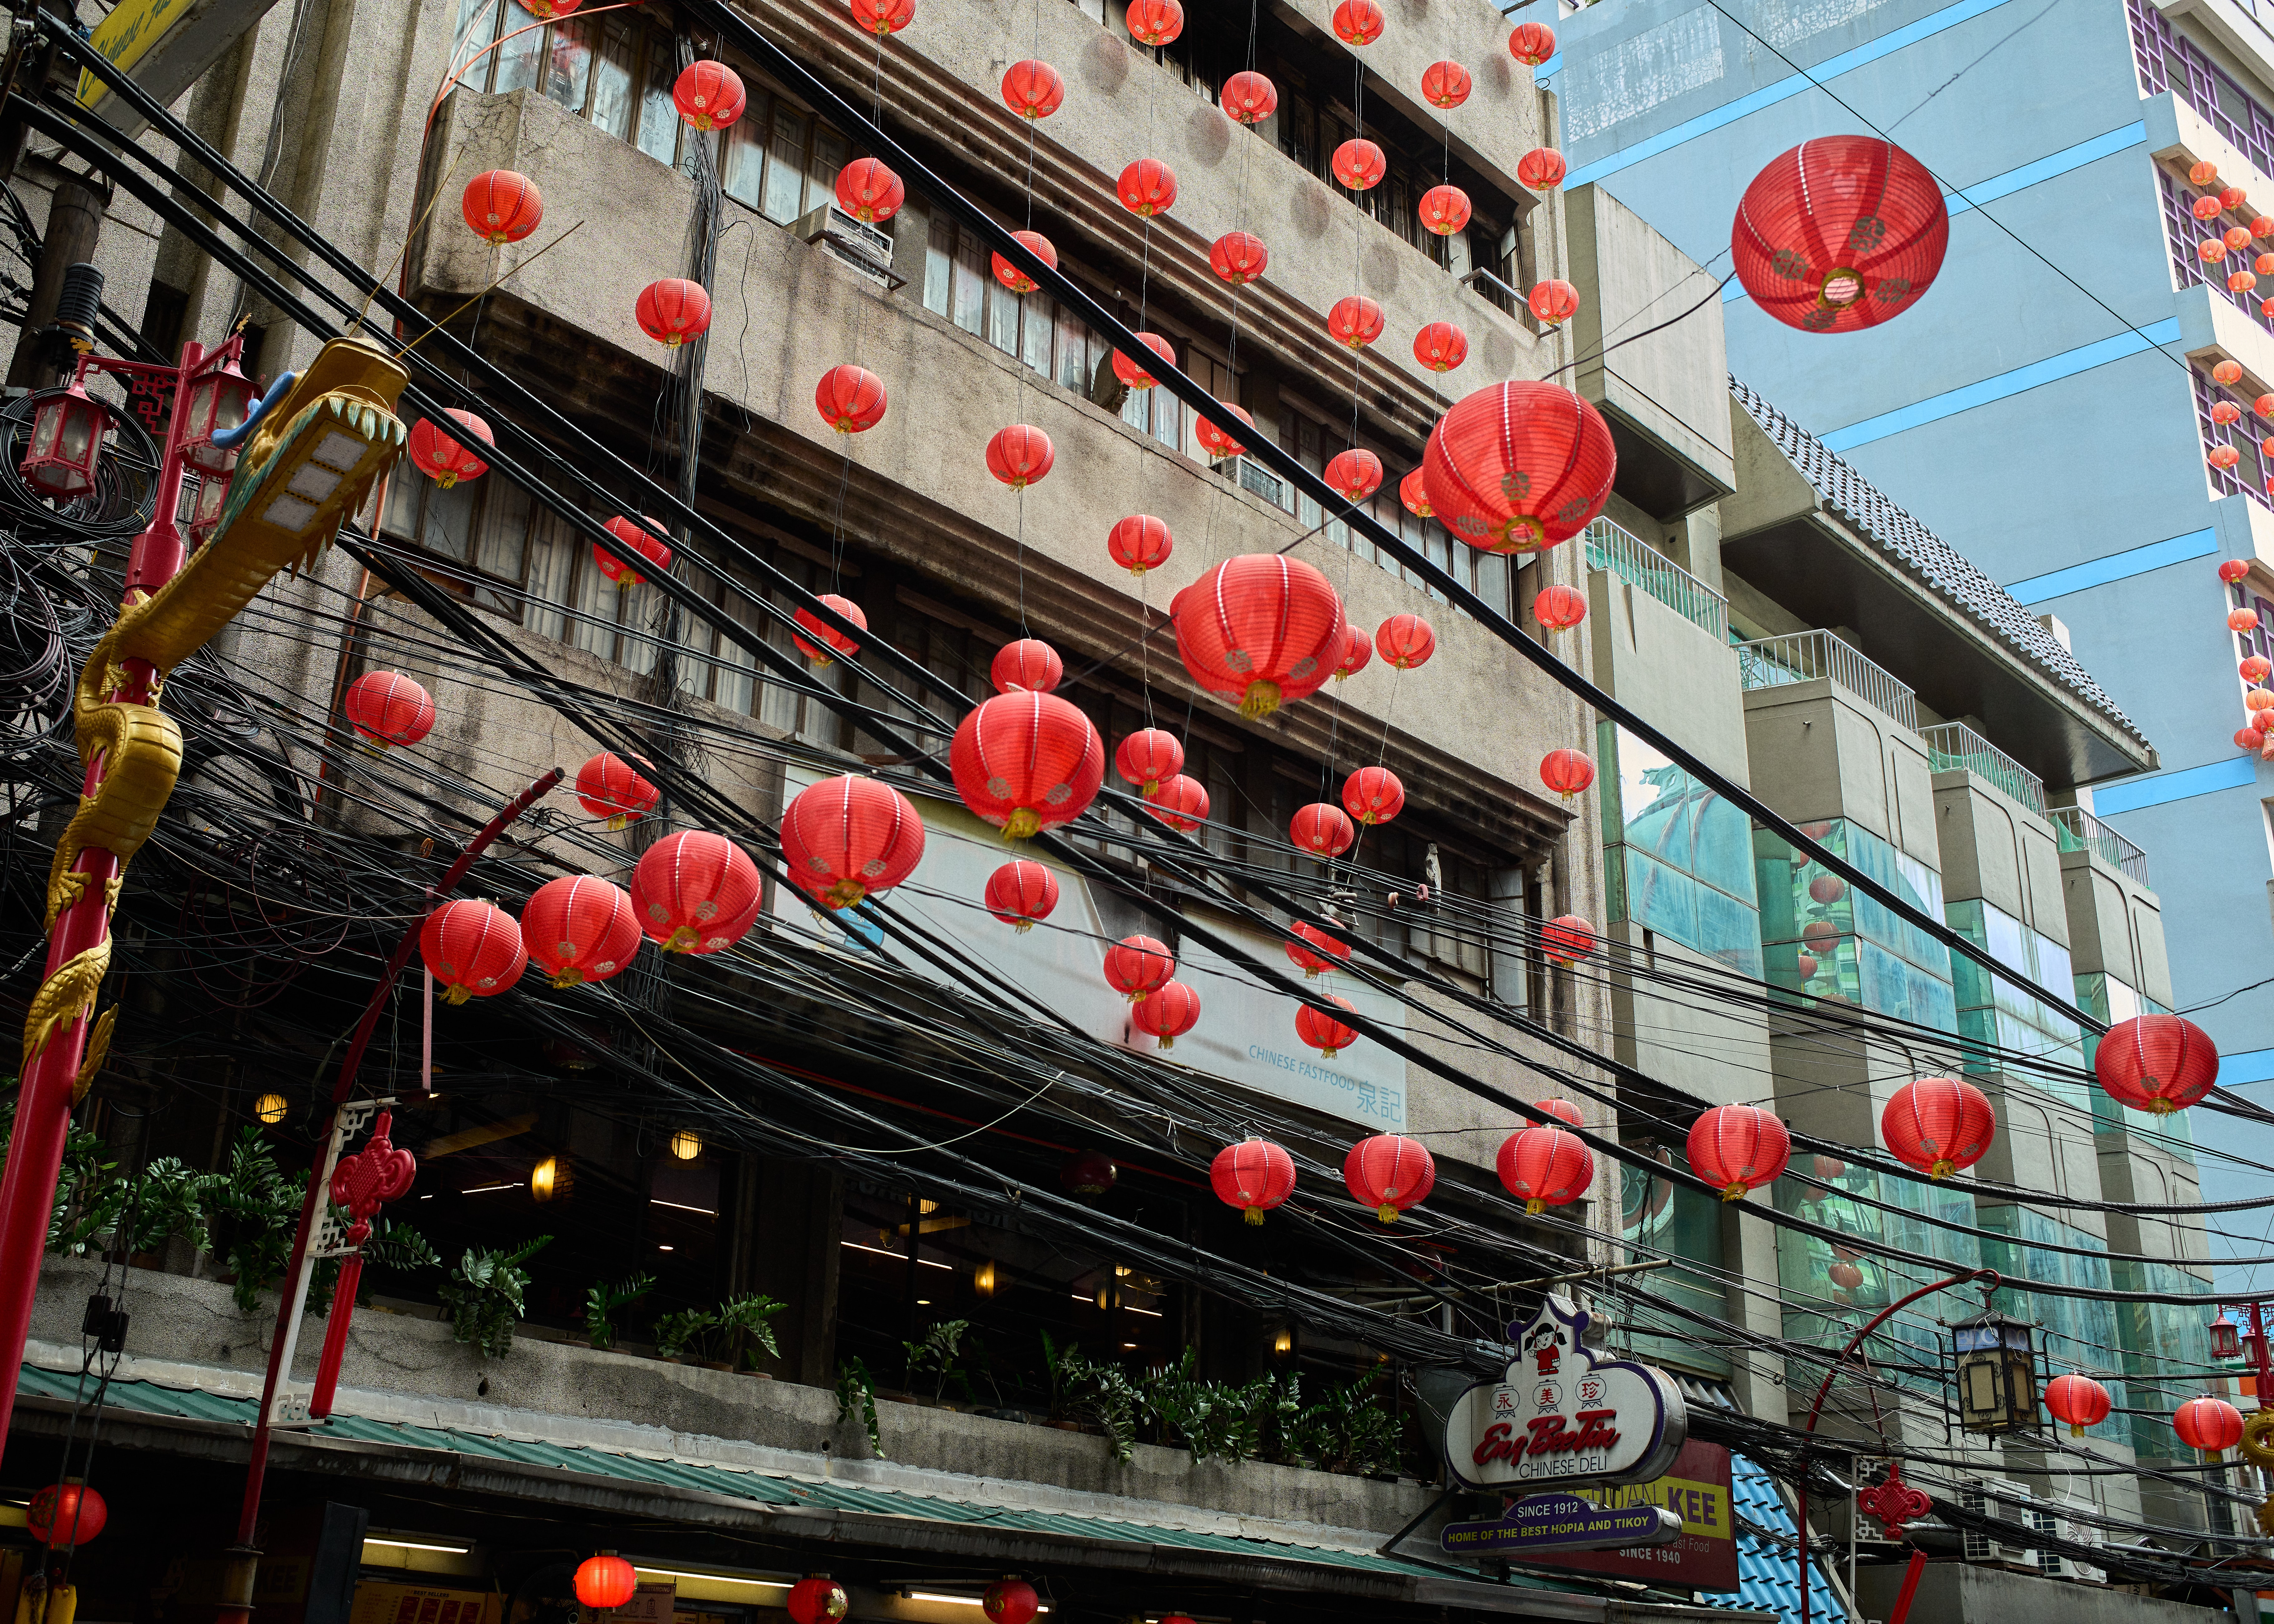 Chinese lanterns on the street of Binondo